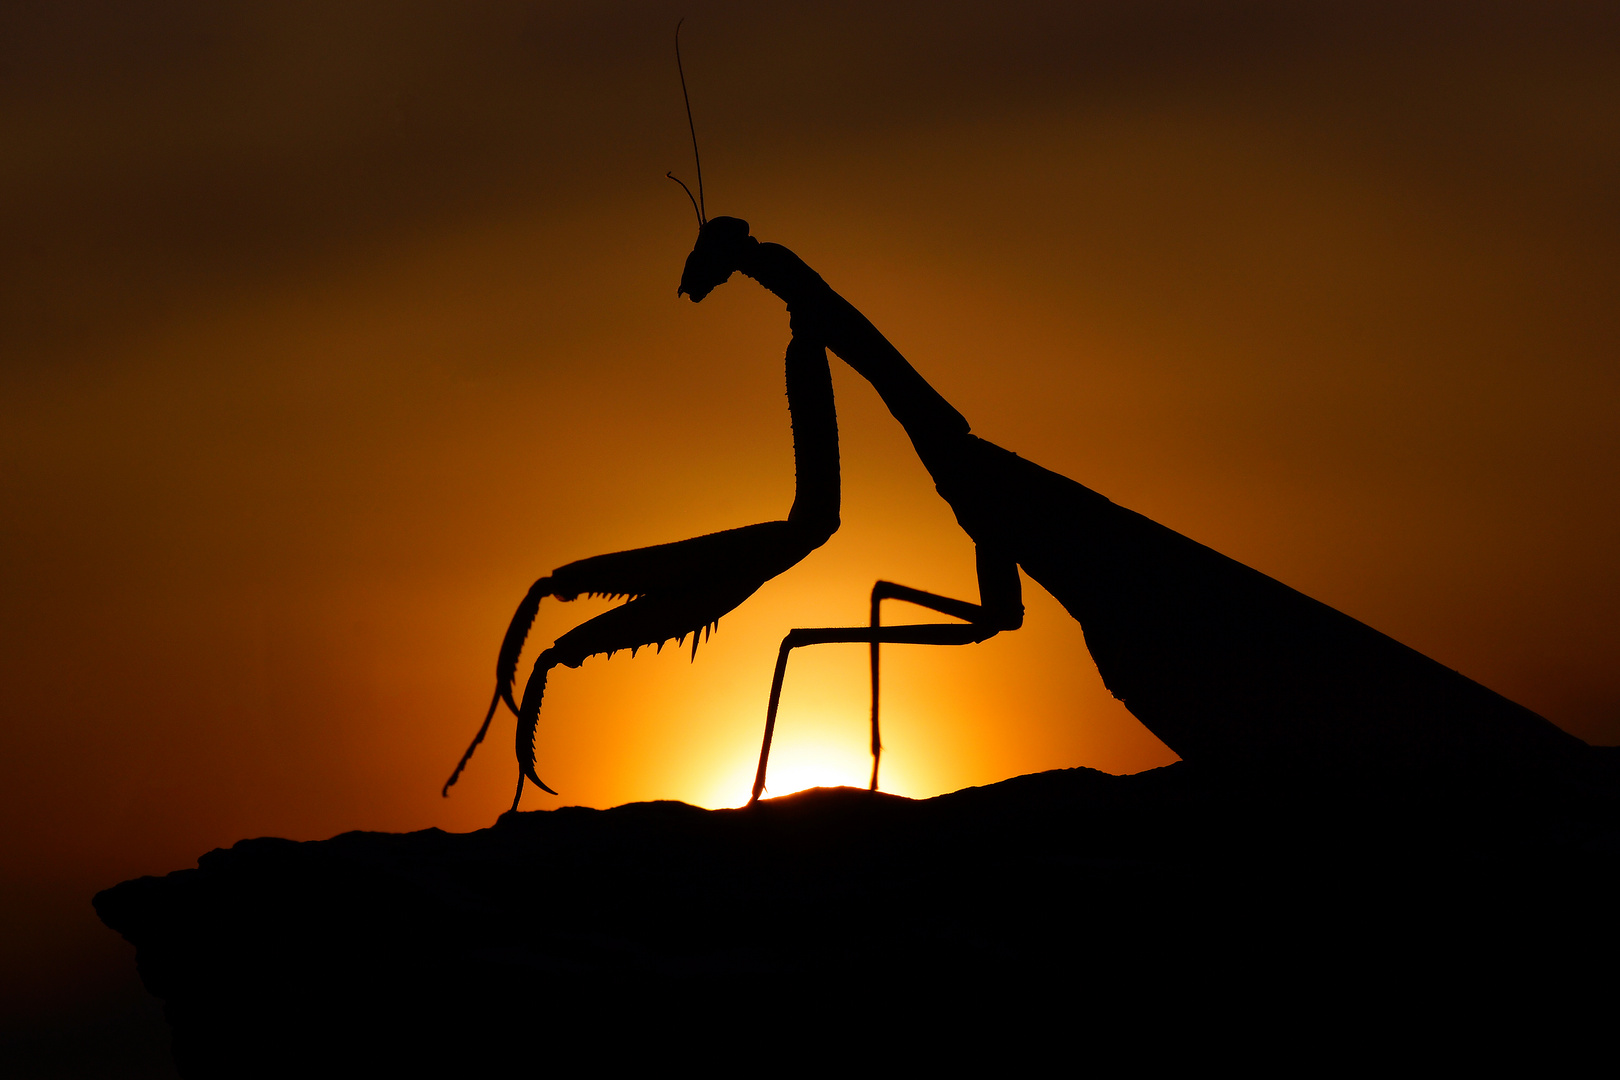 When the sun goes down....(Mantis religiosa)